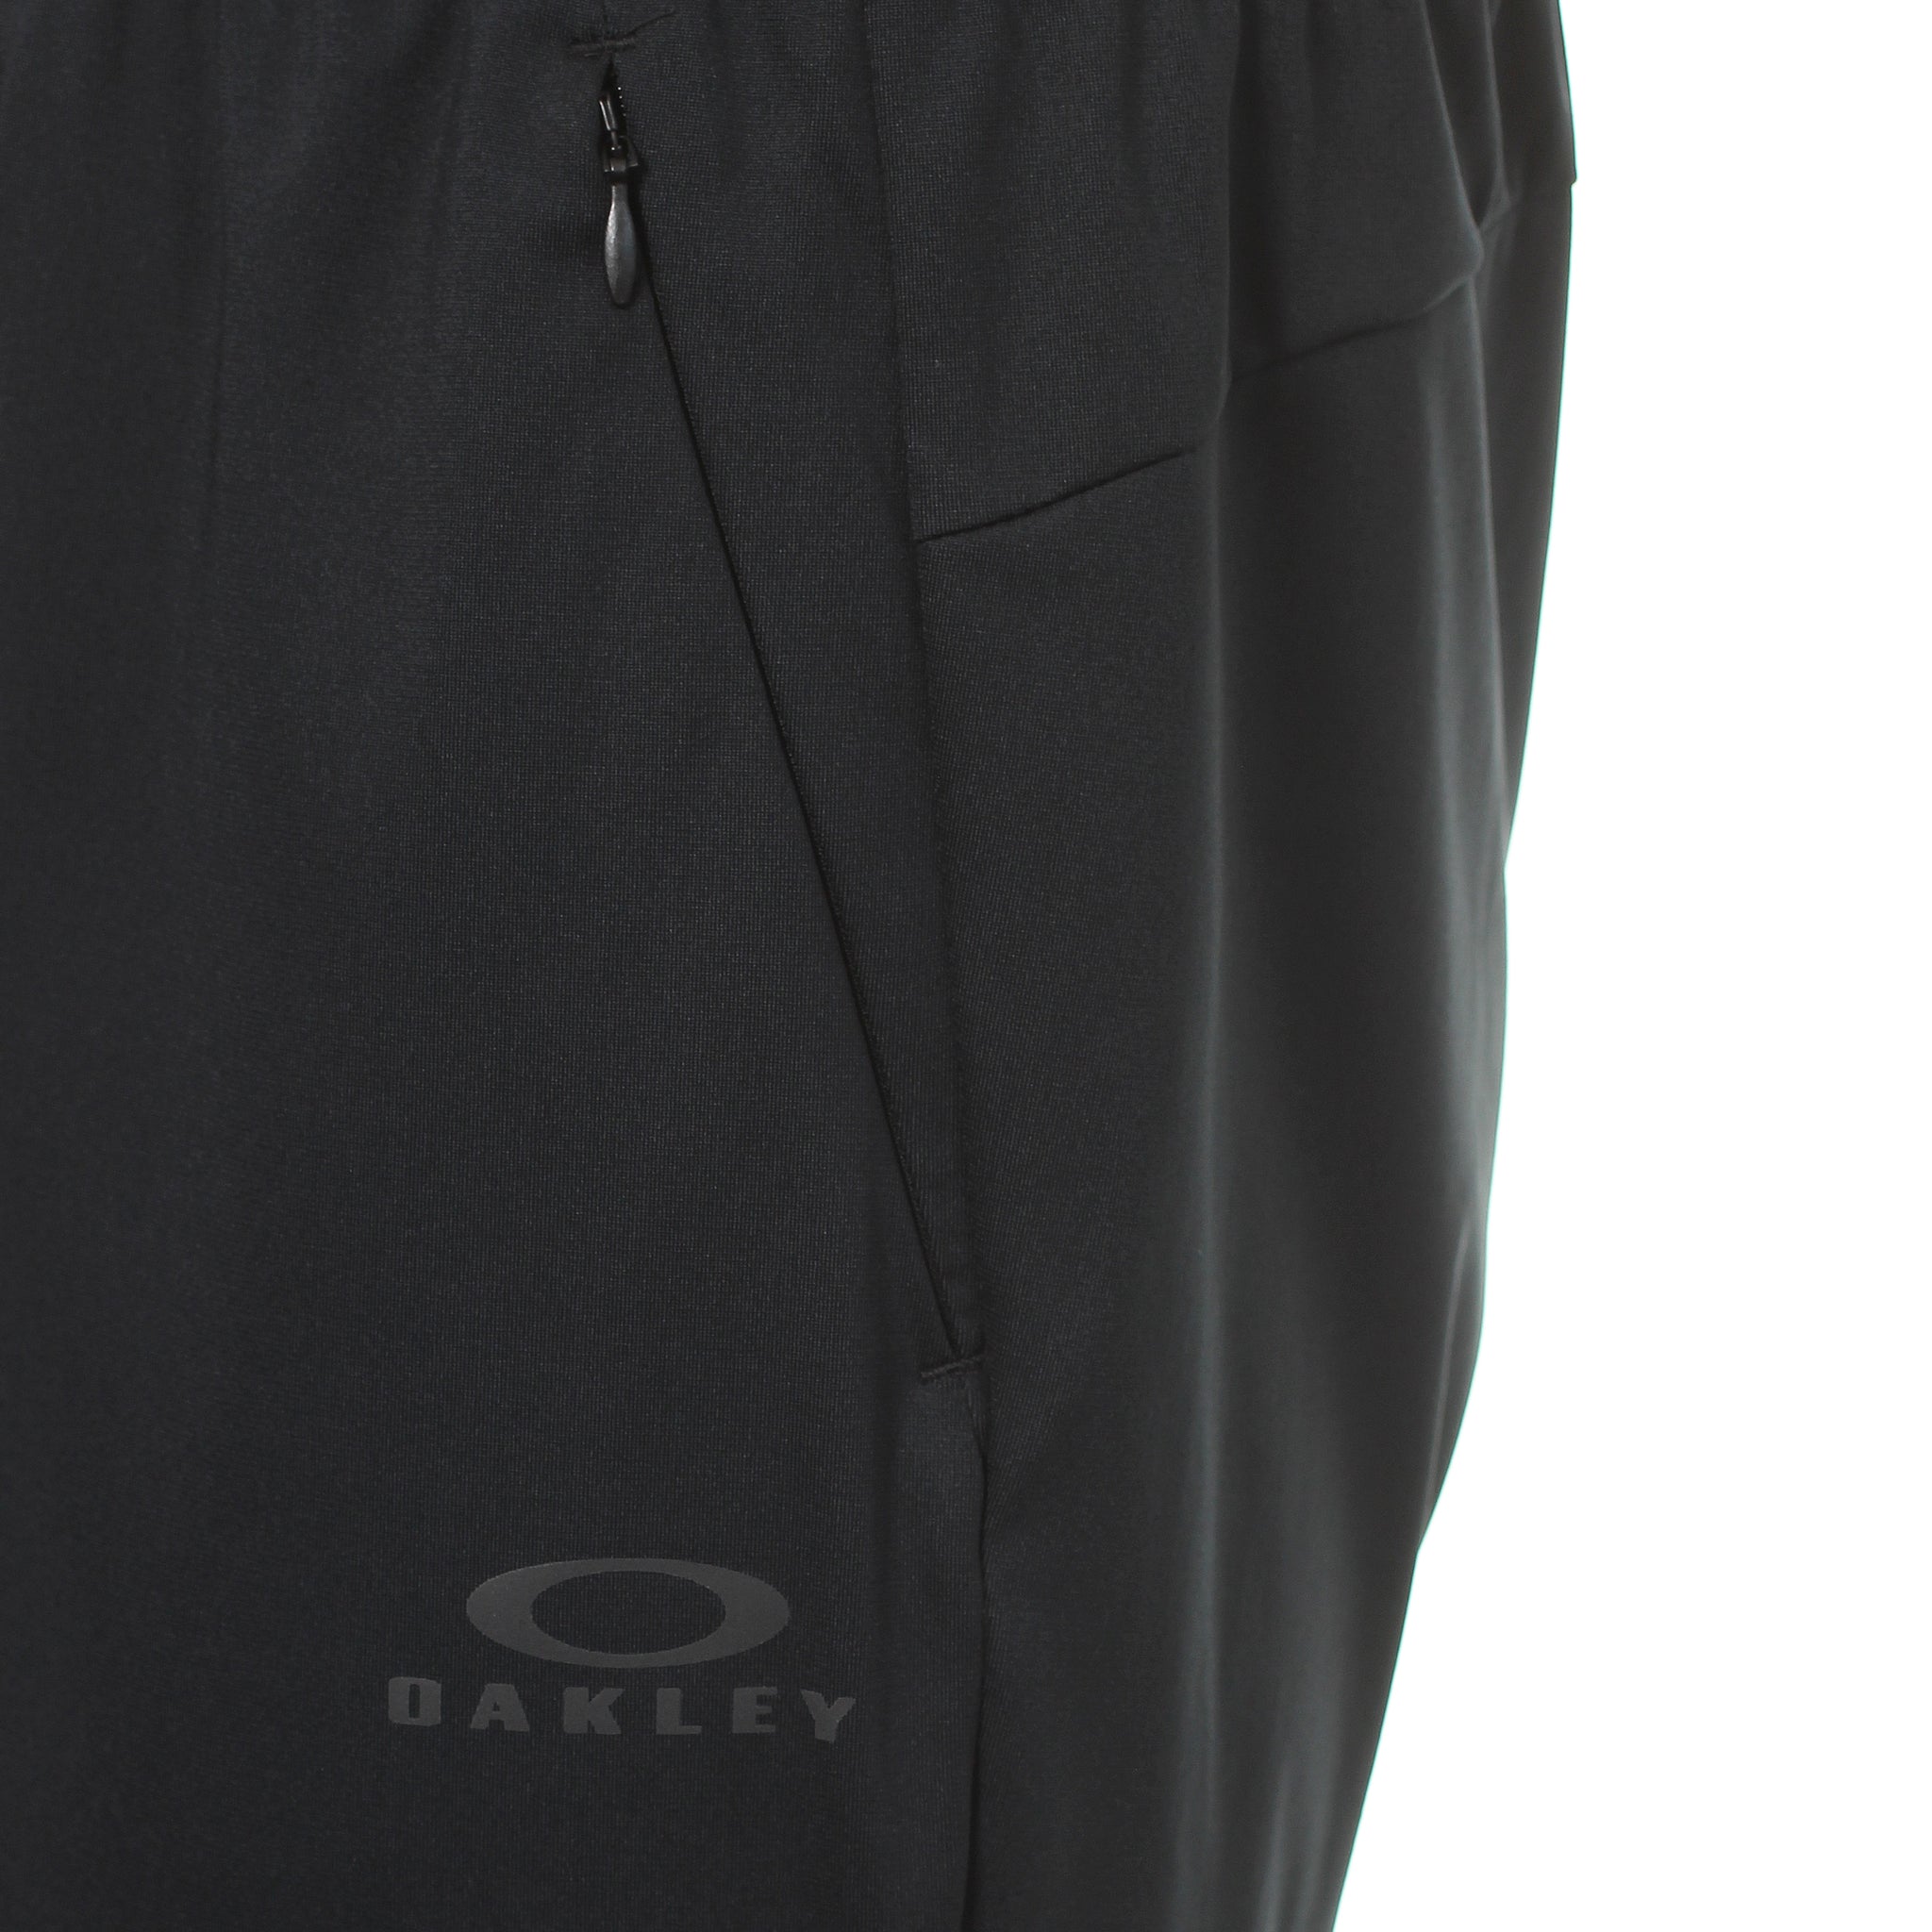 Oakley Foundation 2.0 Pants